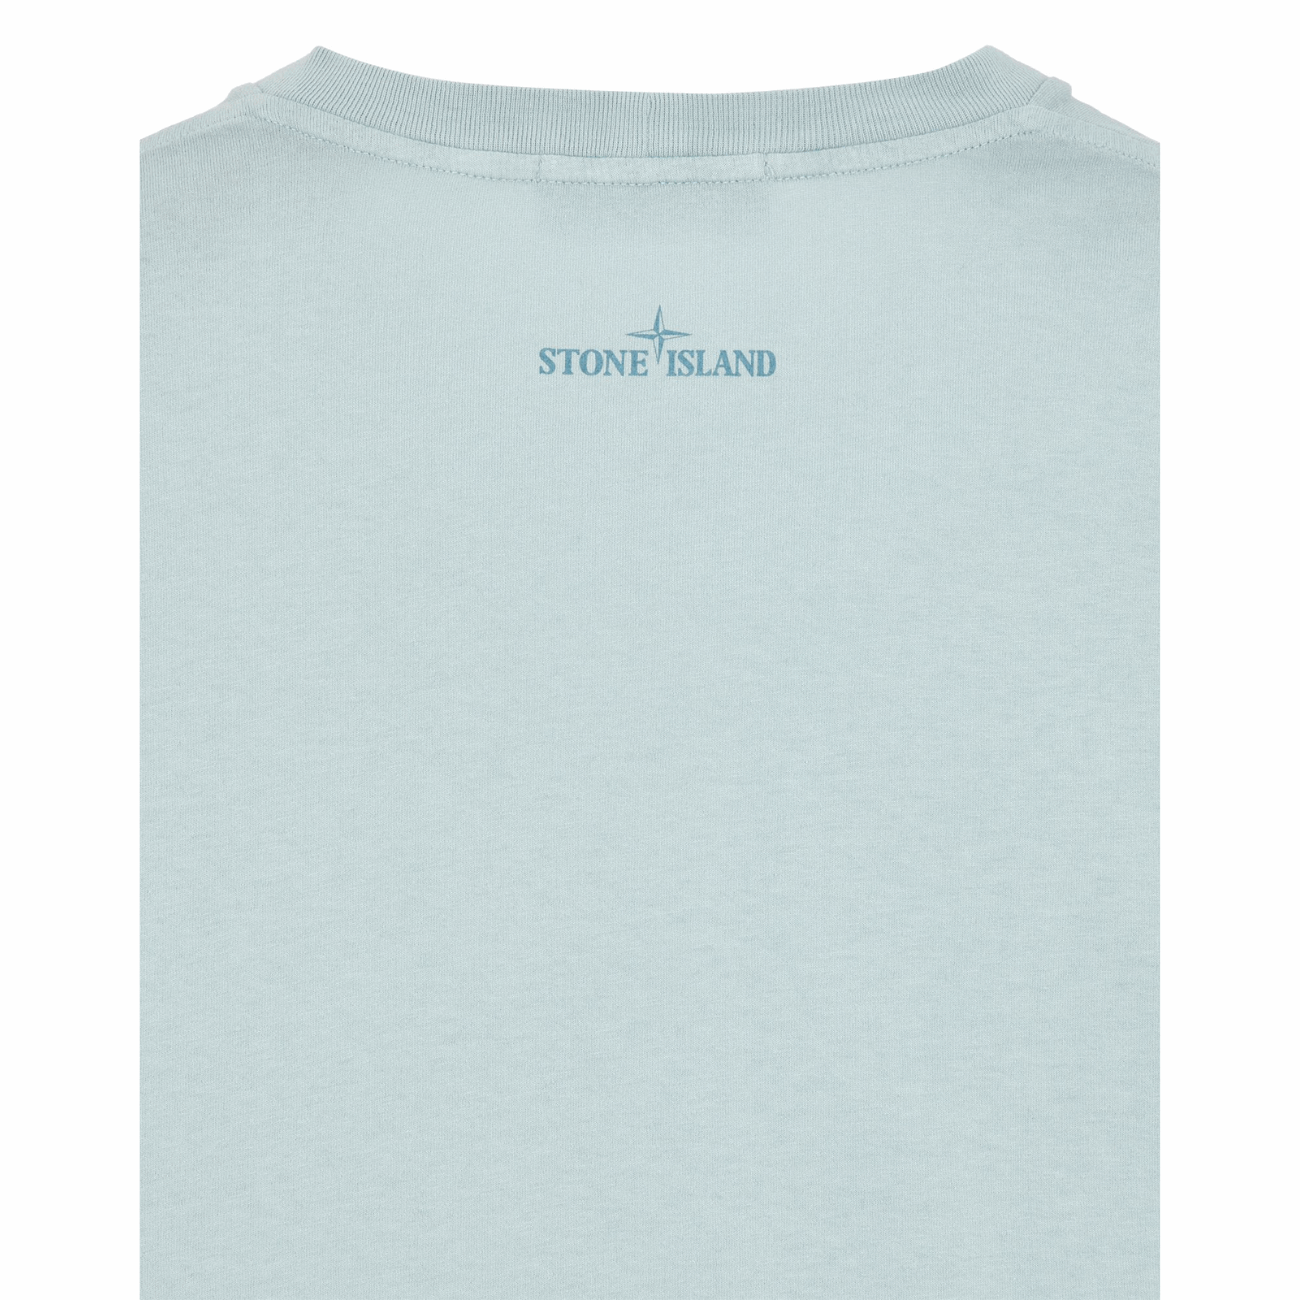 Stone Island 781524693V0041 24693 'Abbreviation Two' Print Men's T-Shirt, Sky Blue